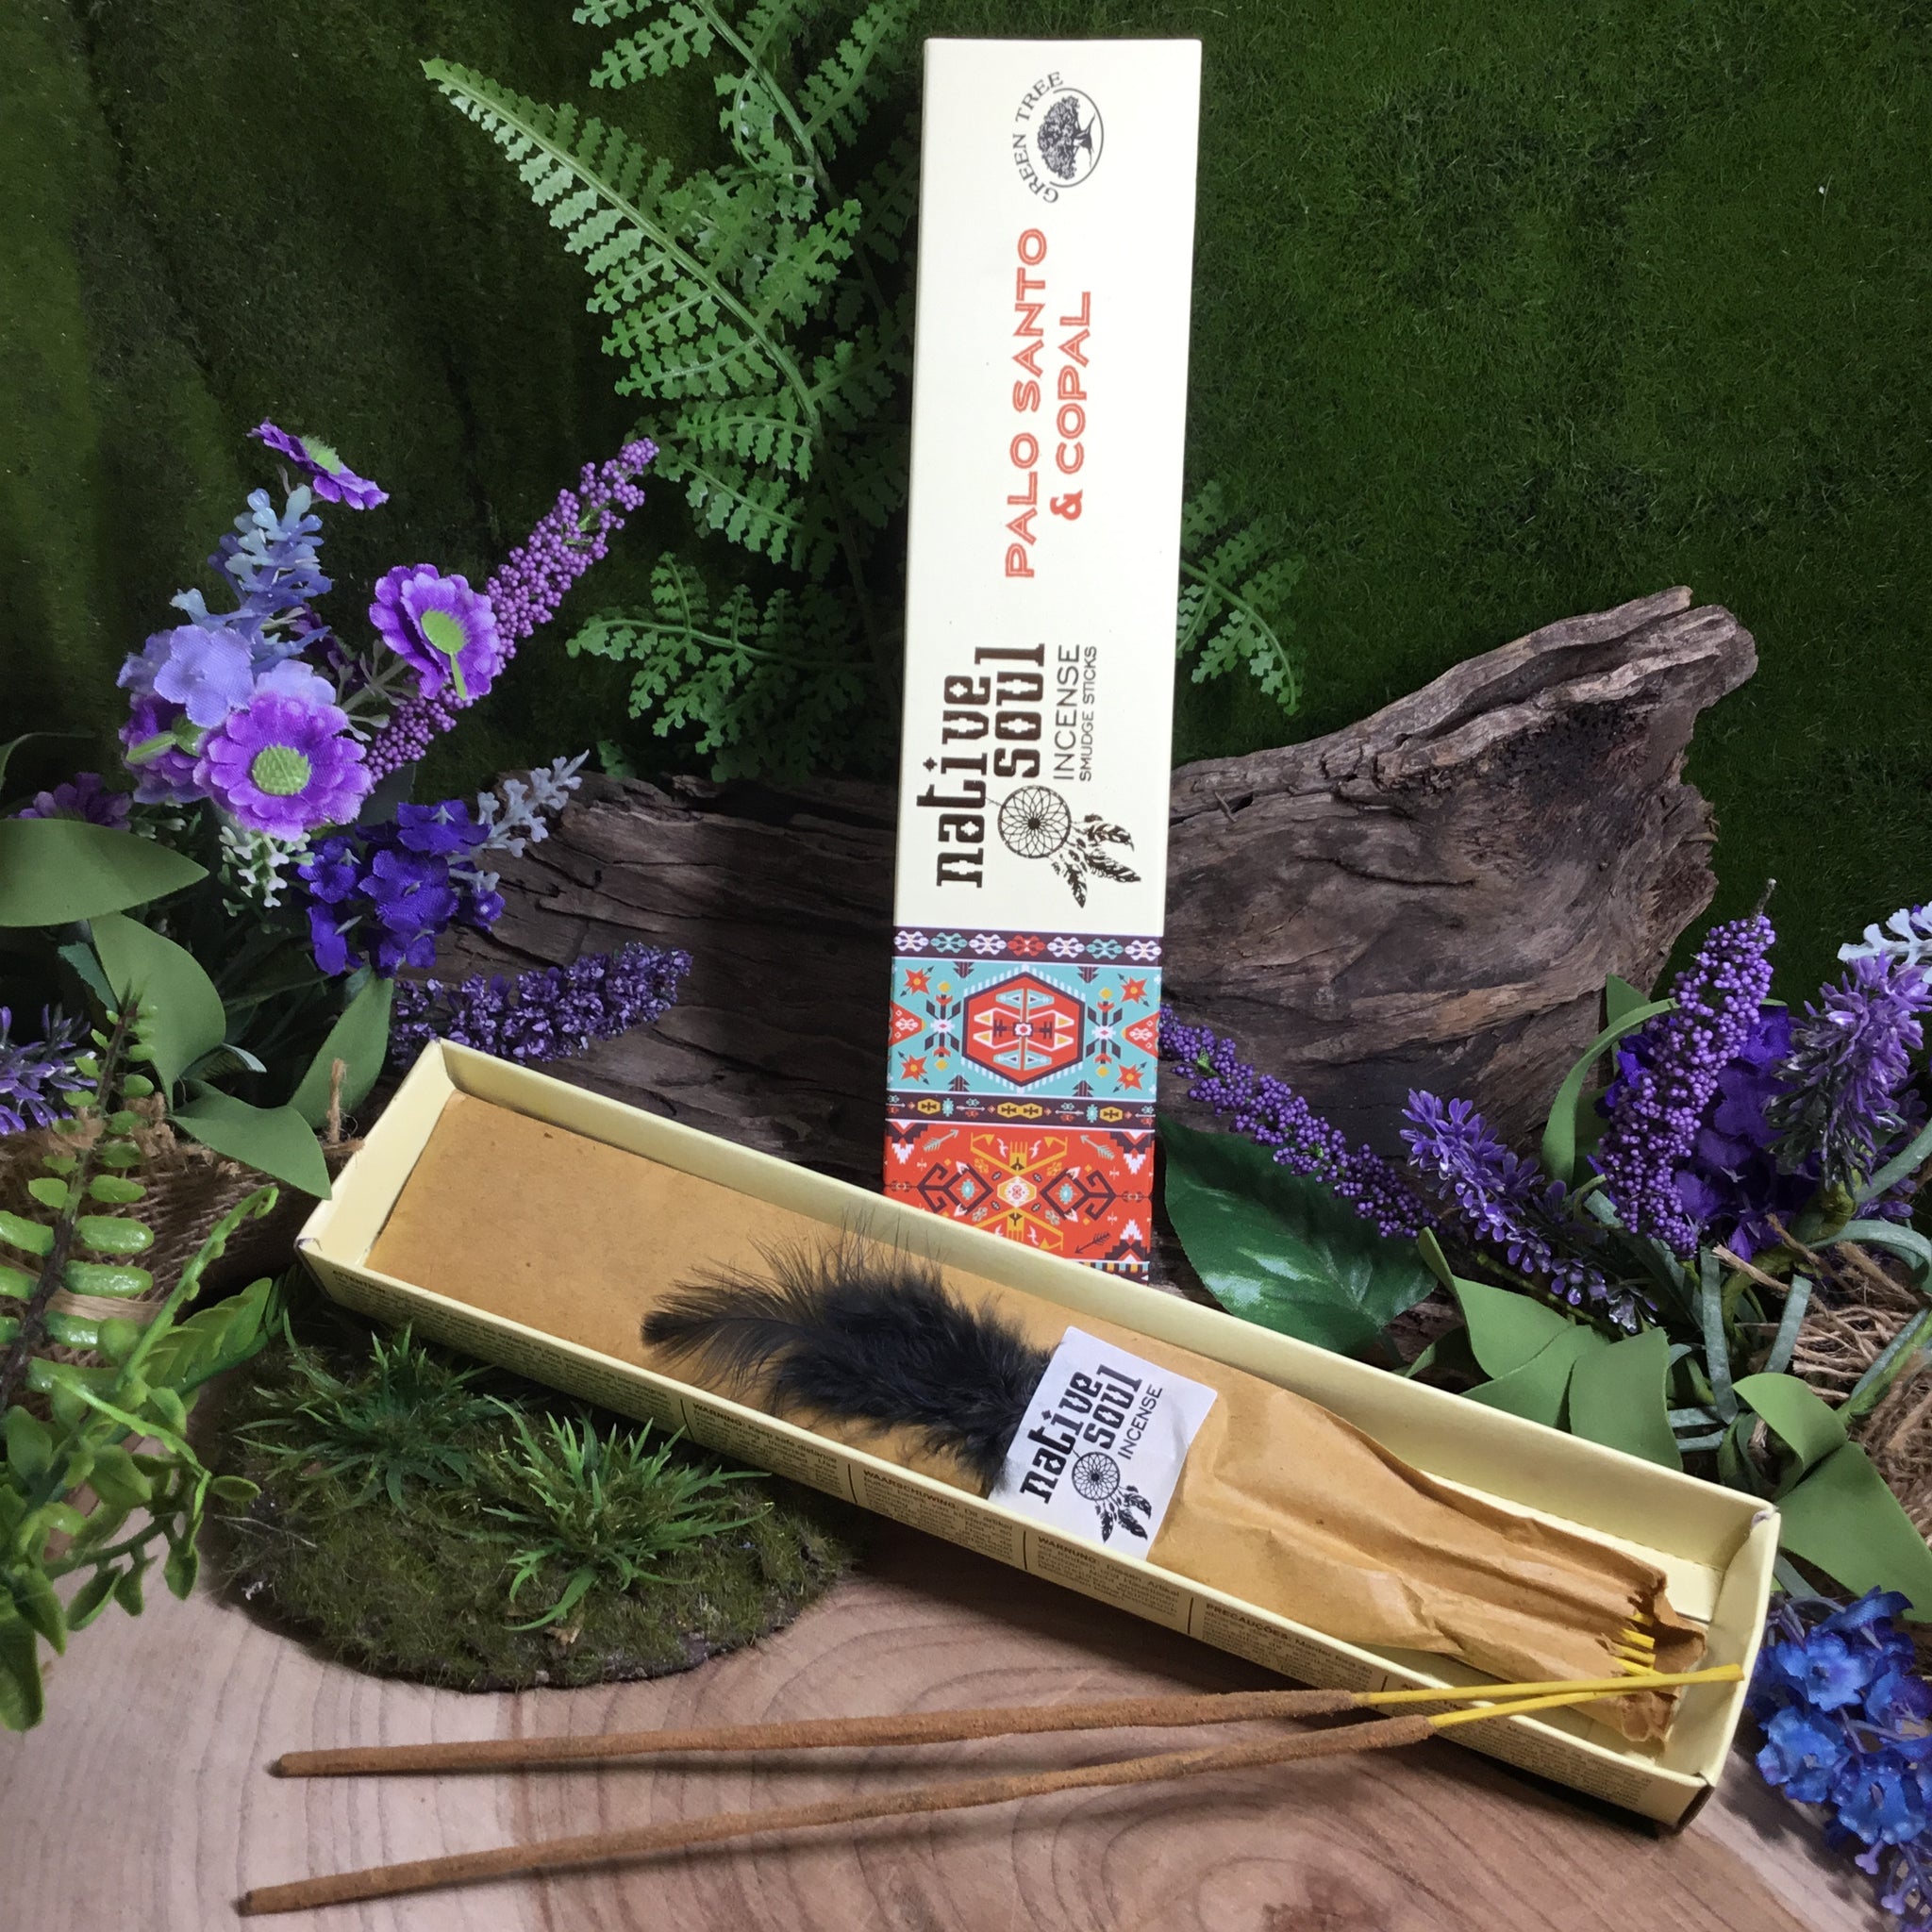 Palo Santo and copal “native soul” incense sticks